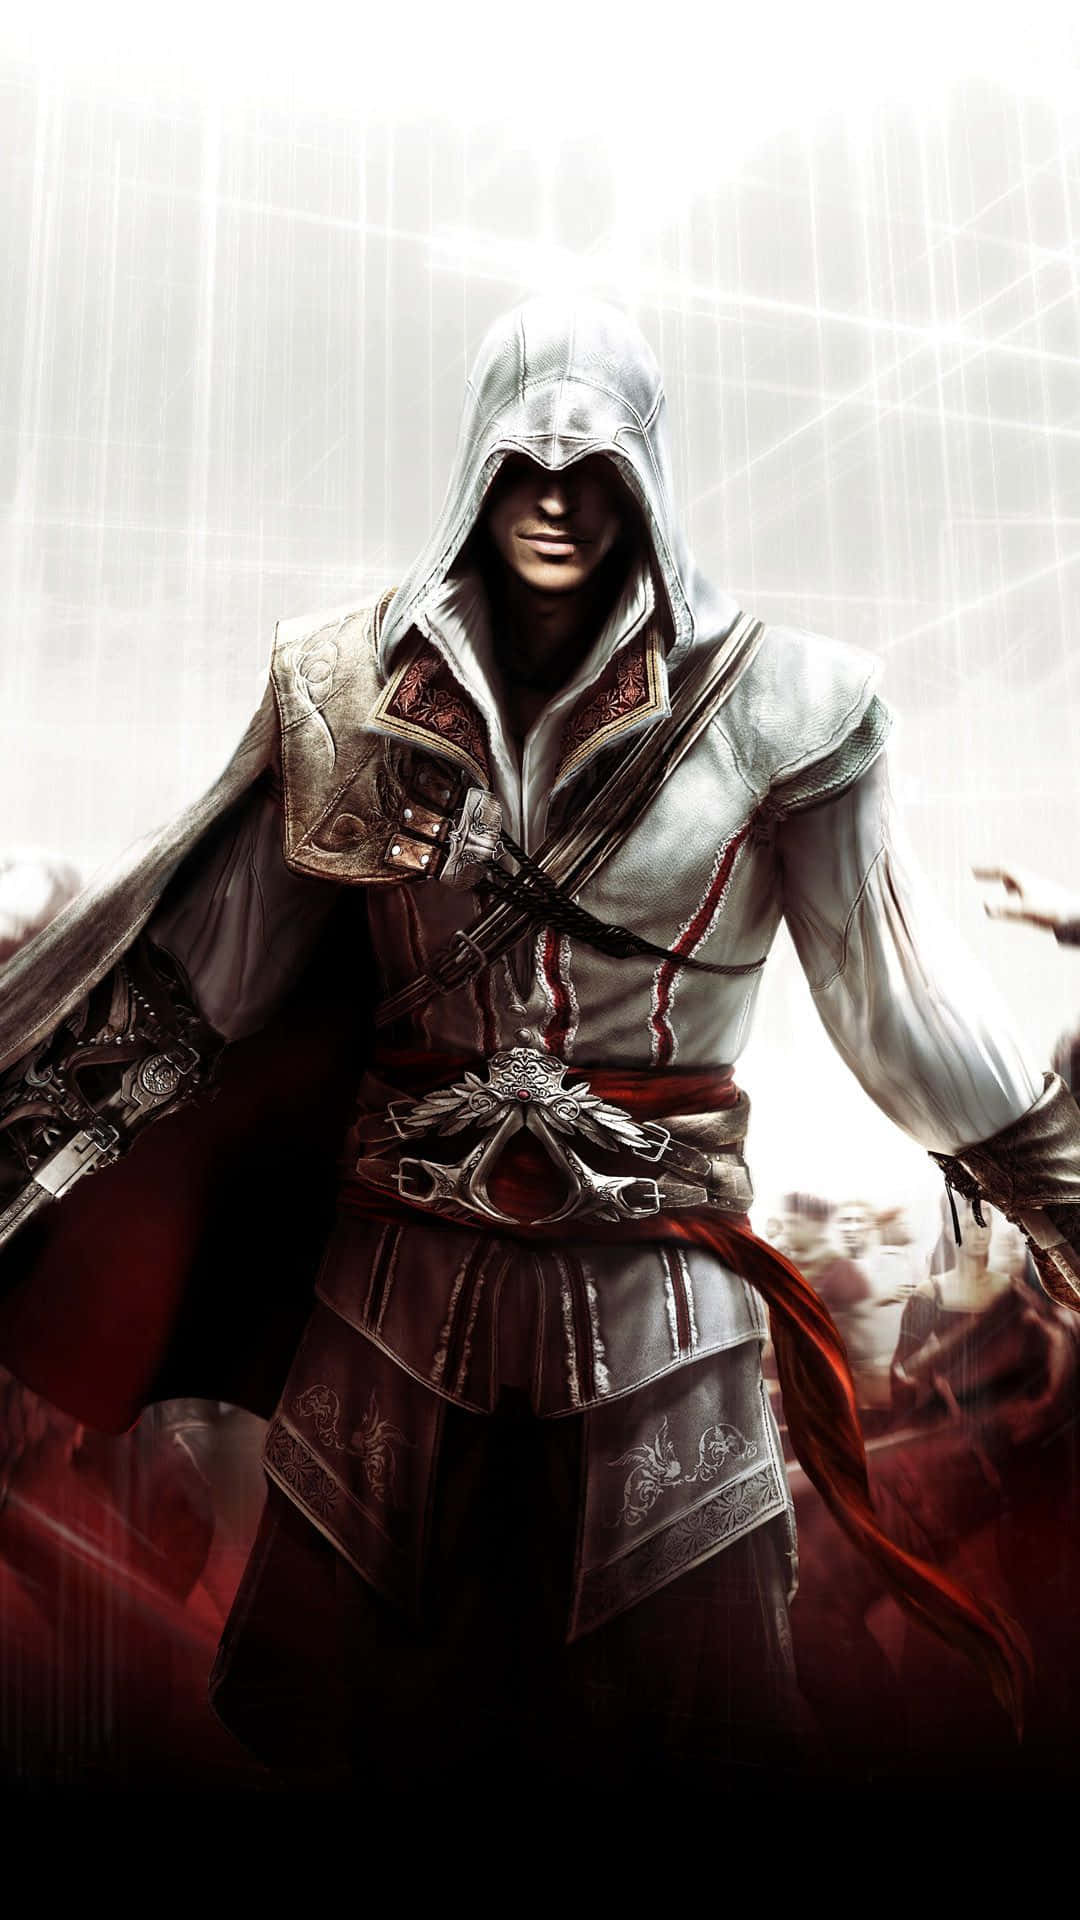 Ezio Auditore da Firenze, the Italian Assassin in action from Assassin's Creed Wallpaper